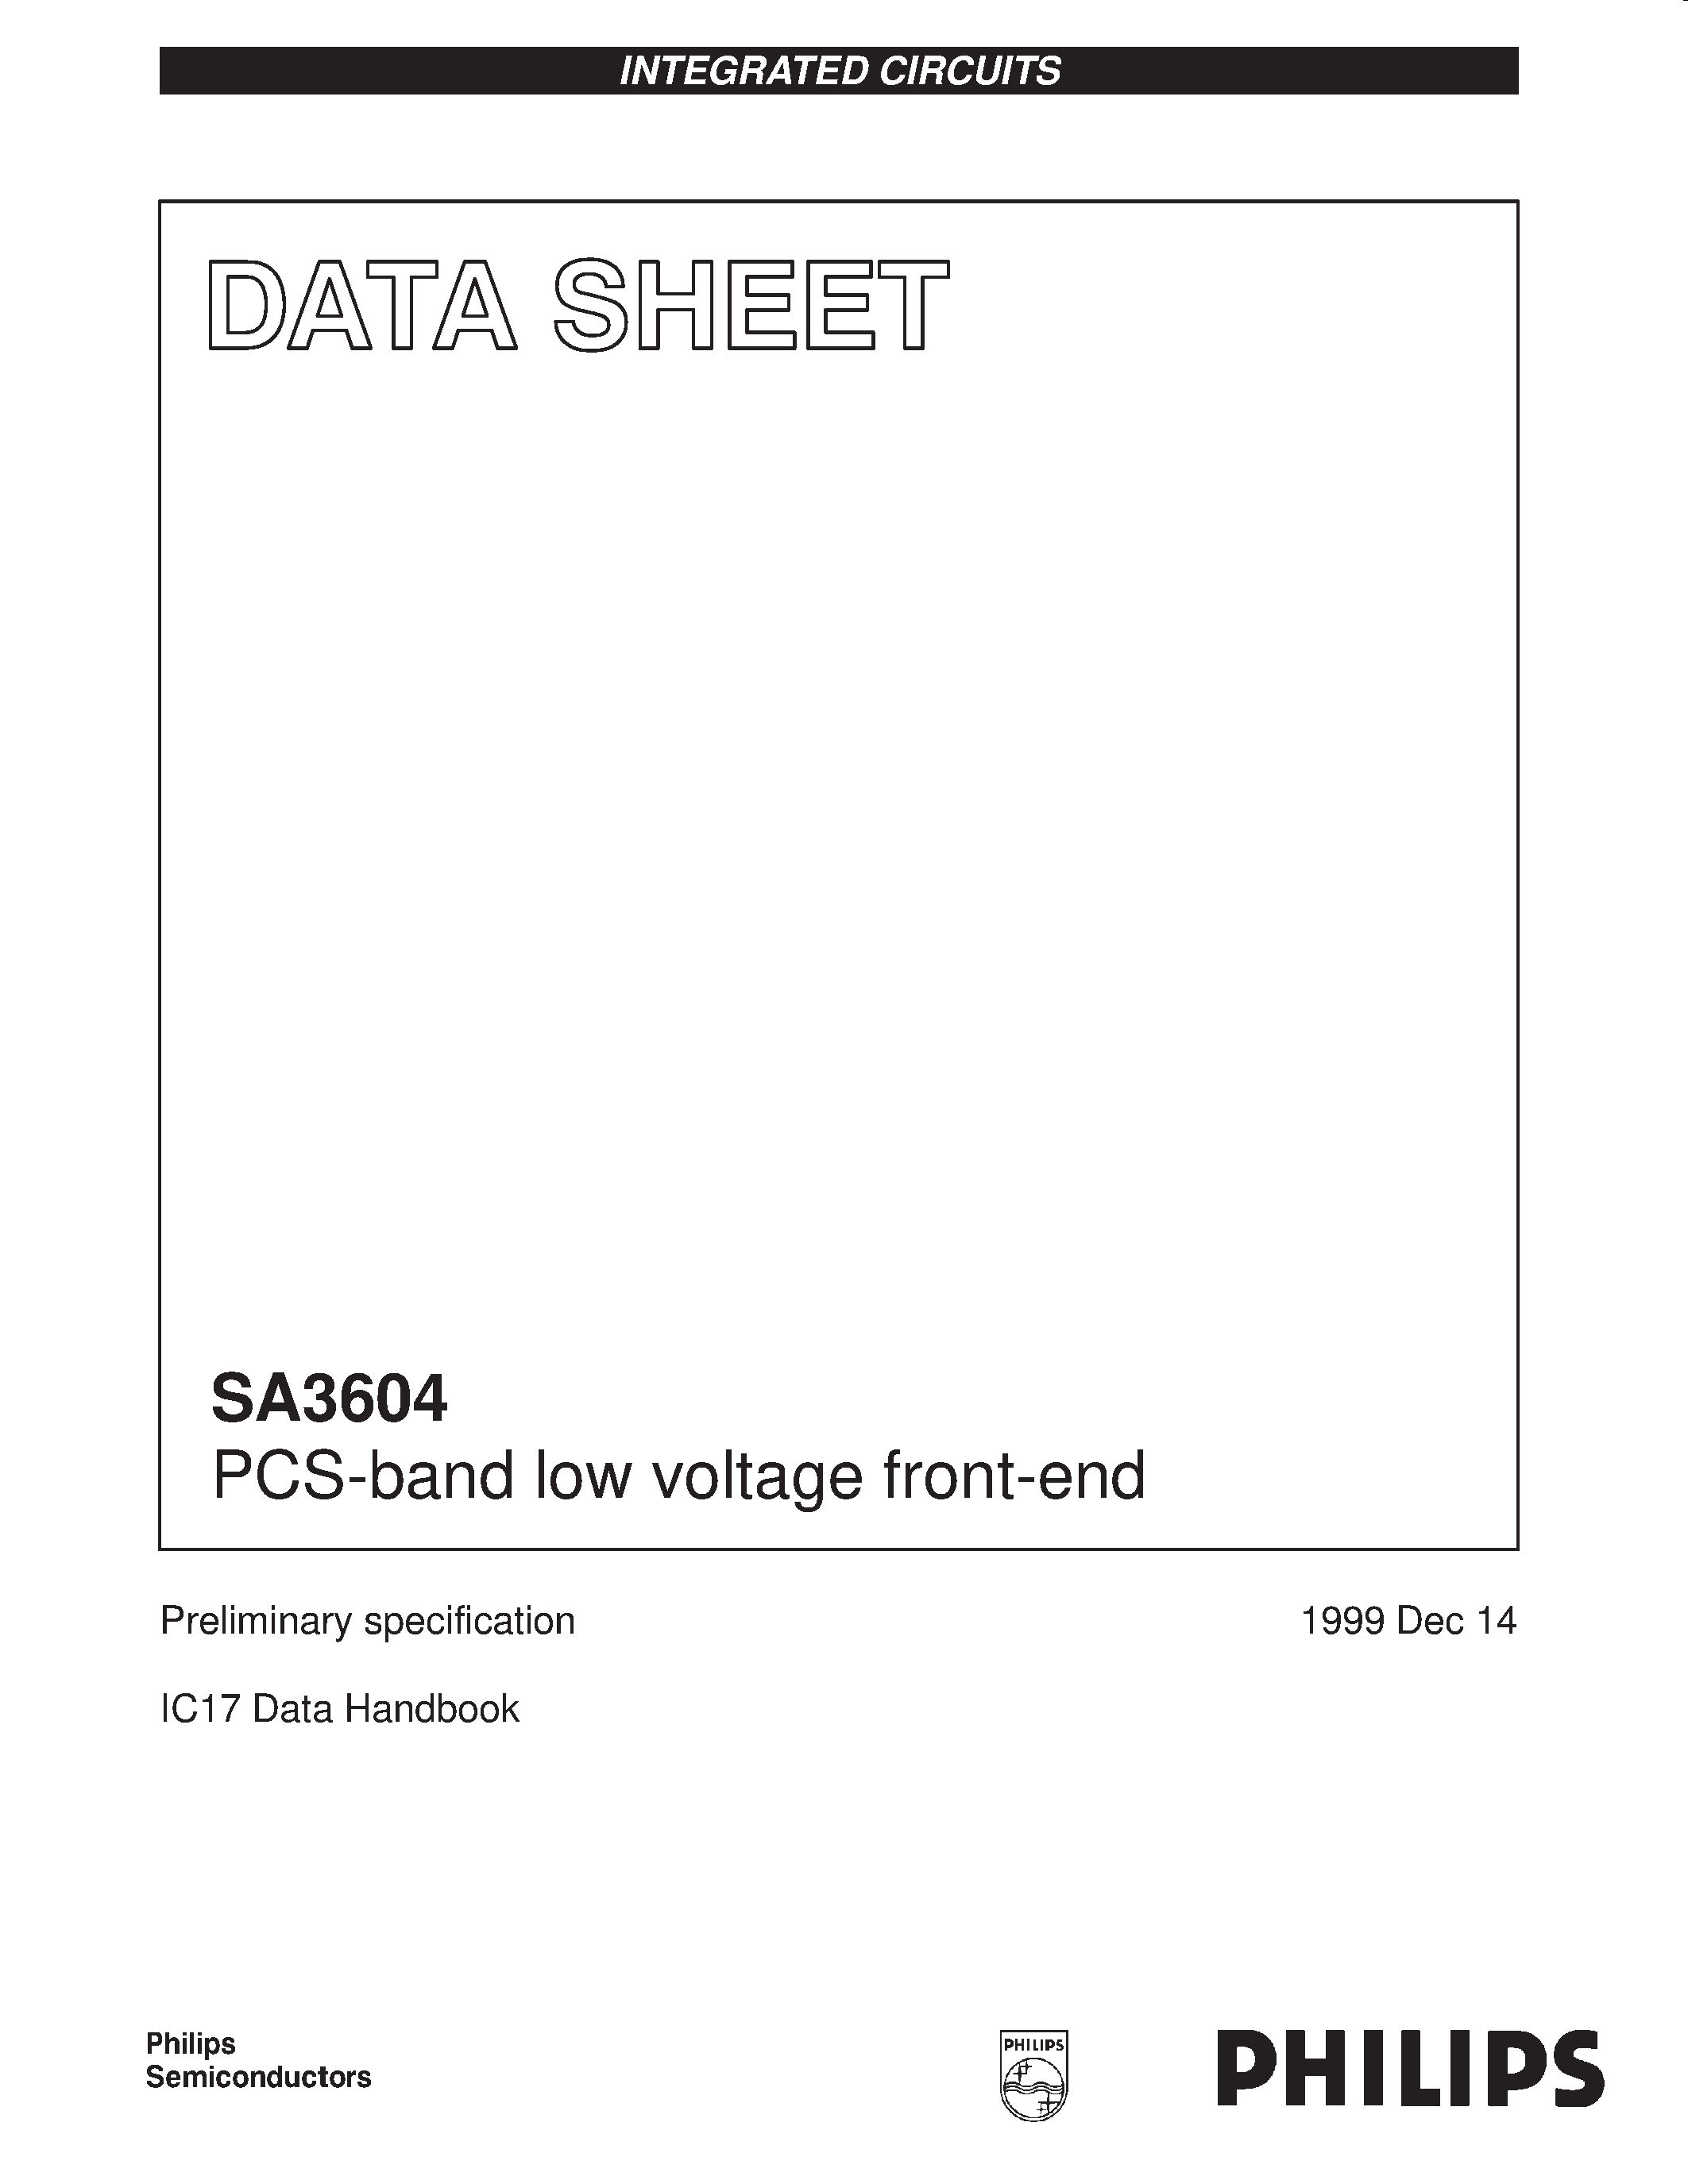 Даташит SA3604 - PCS-band low voltage front-end страница 1